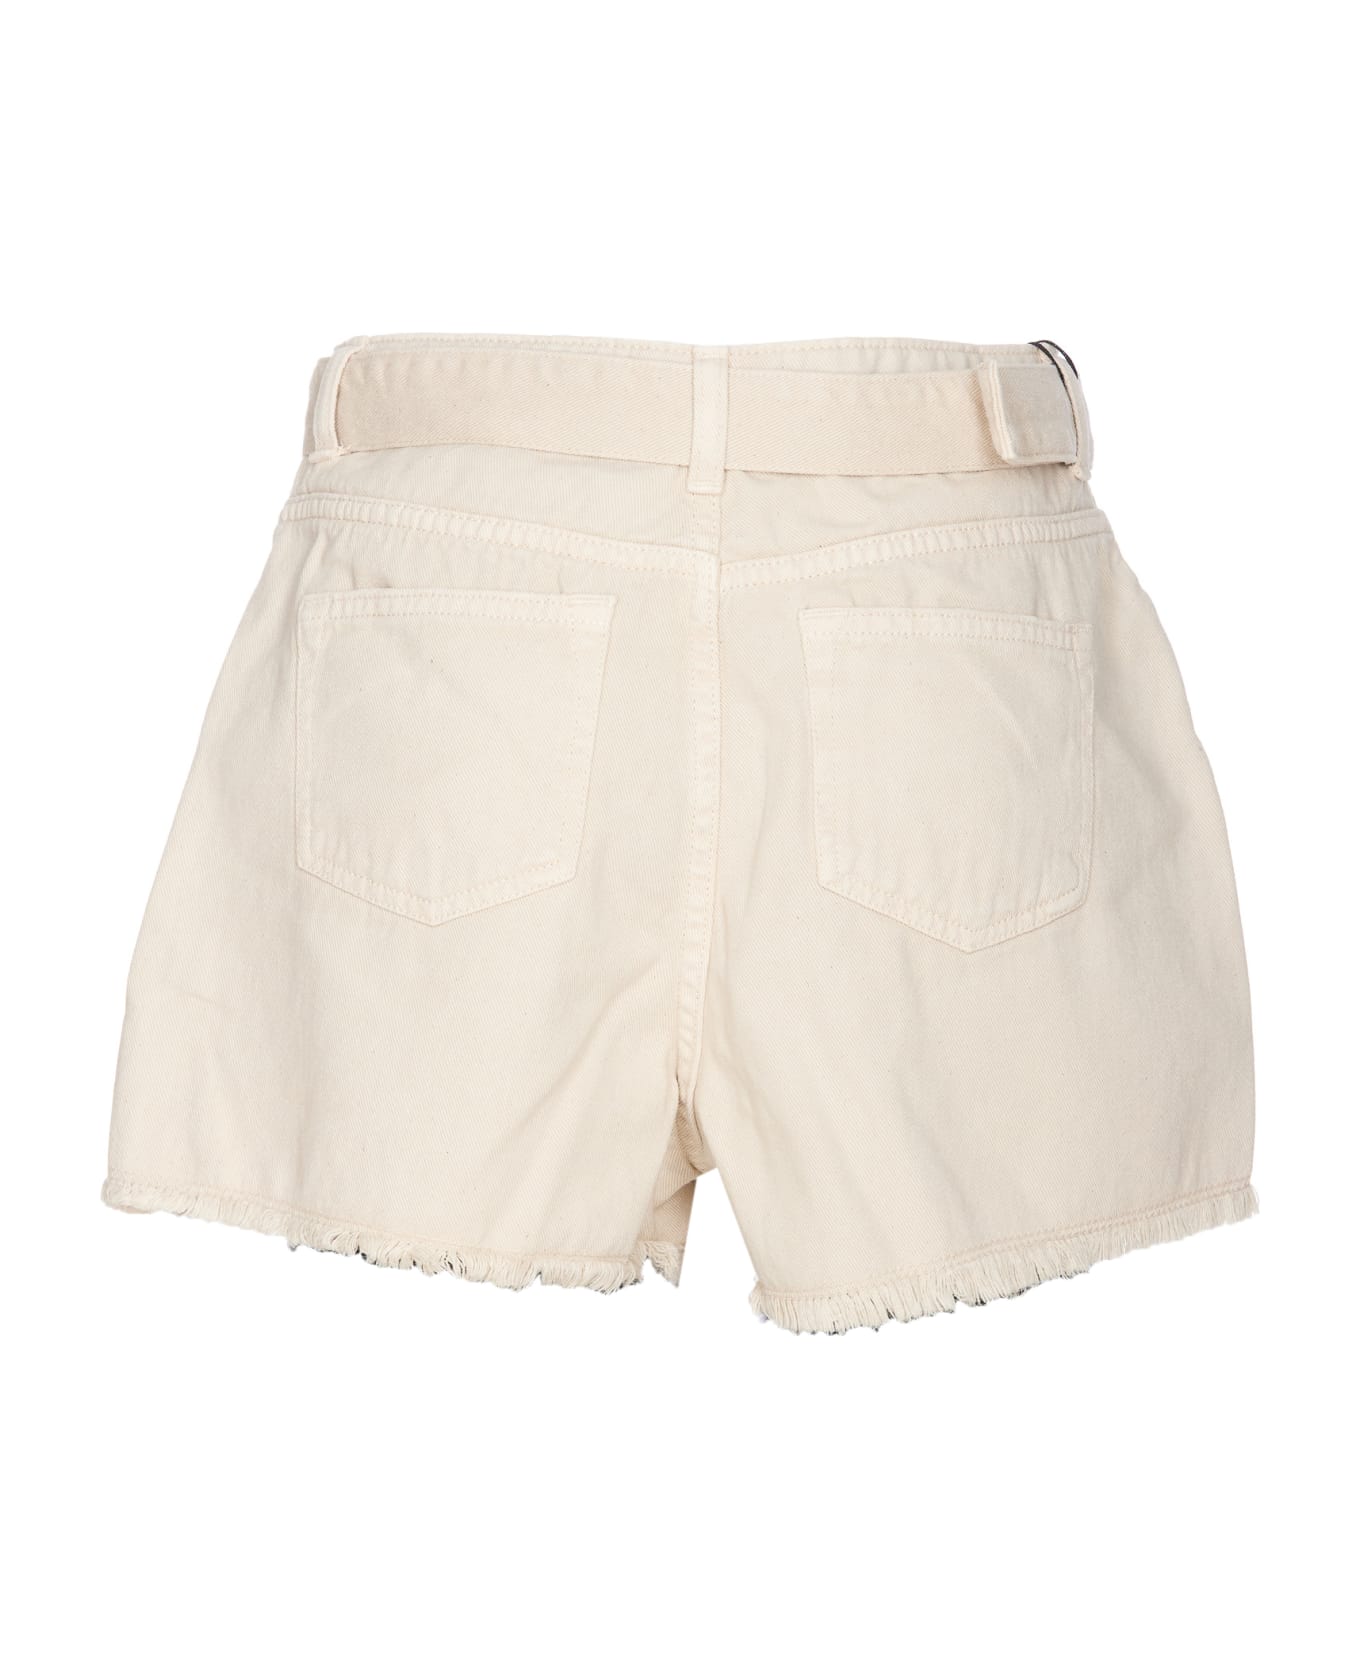 TwinSet Shorts - Beige